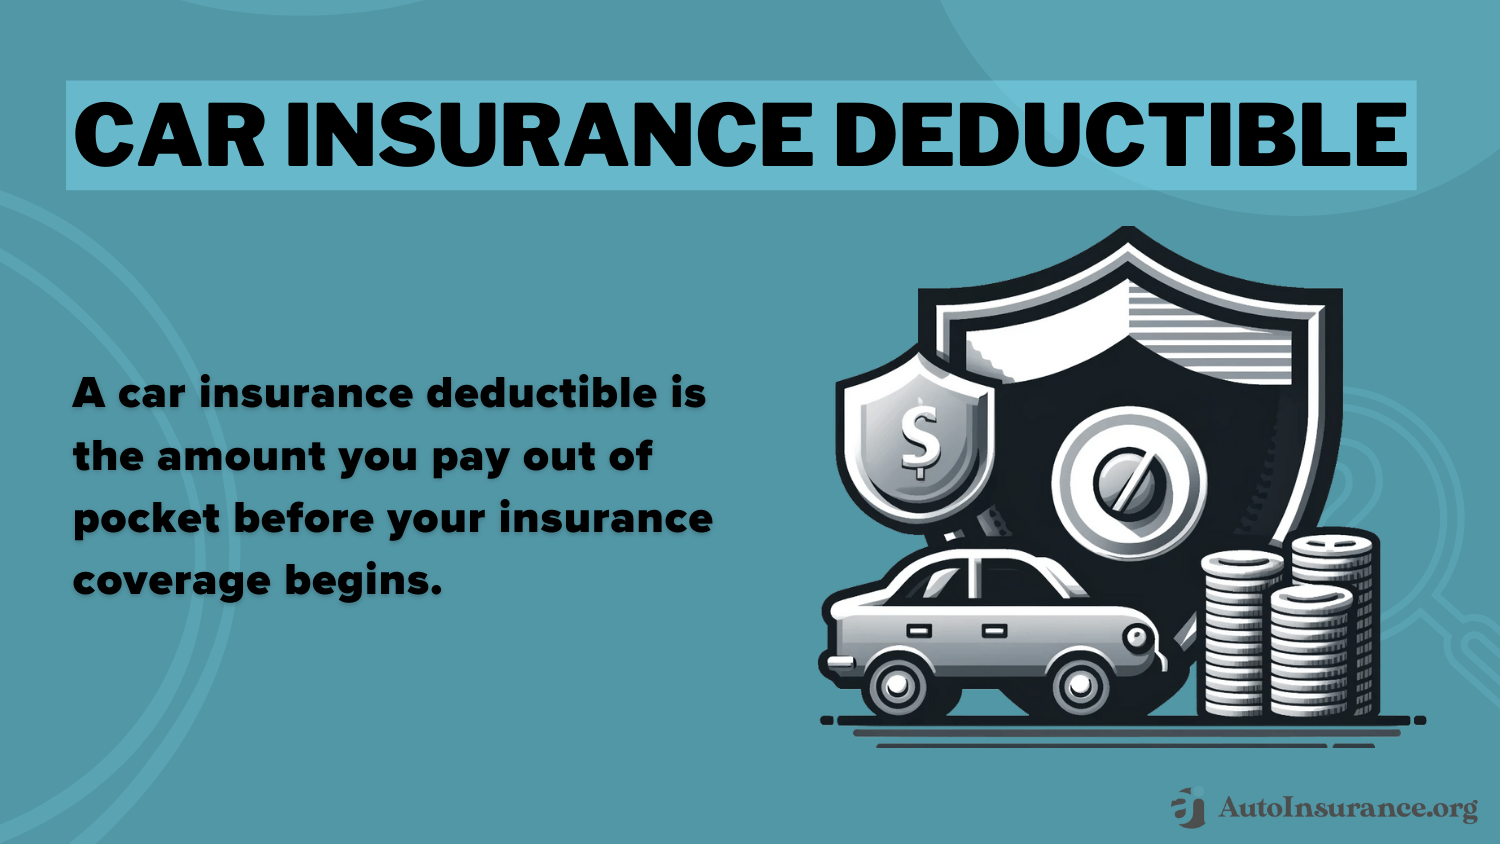 State Farm Auto Insurance Discounts: Car Insurance Deductible Definition Card